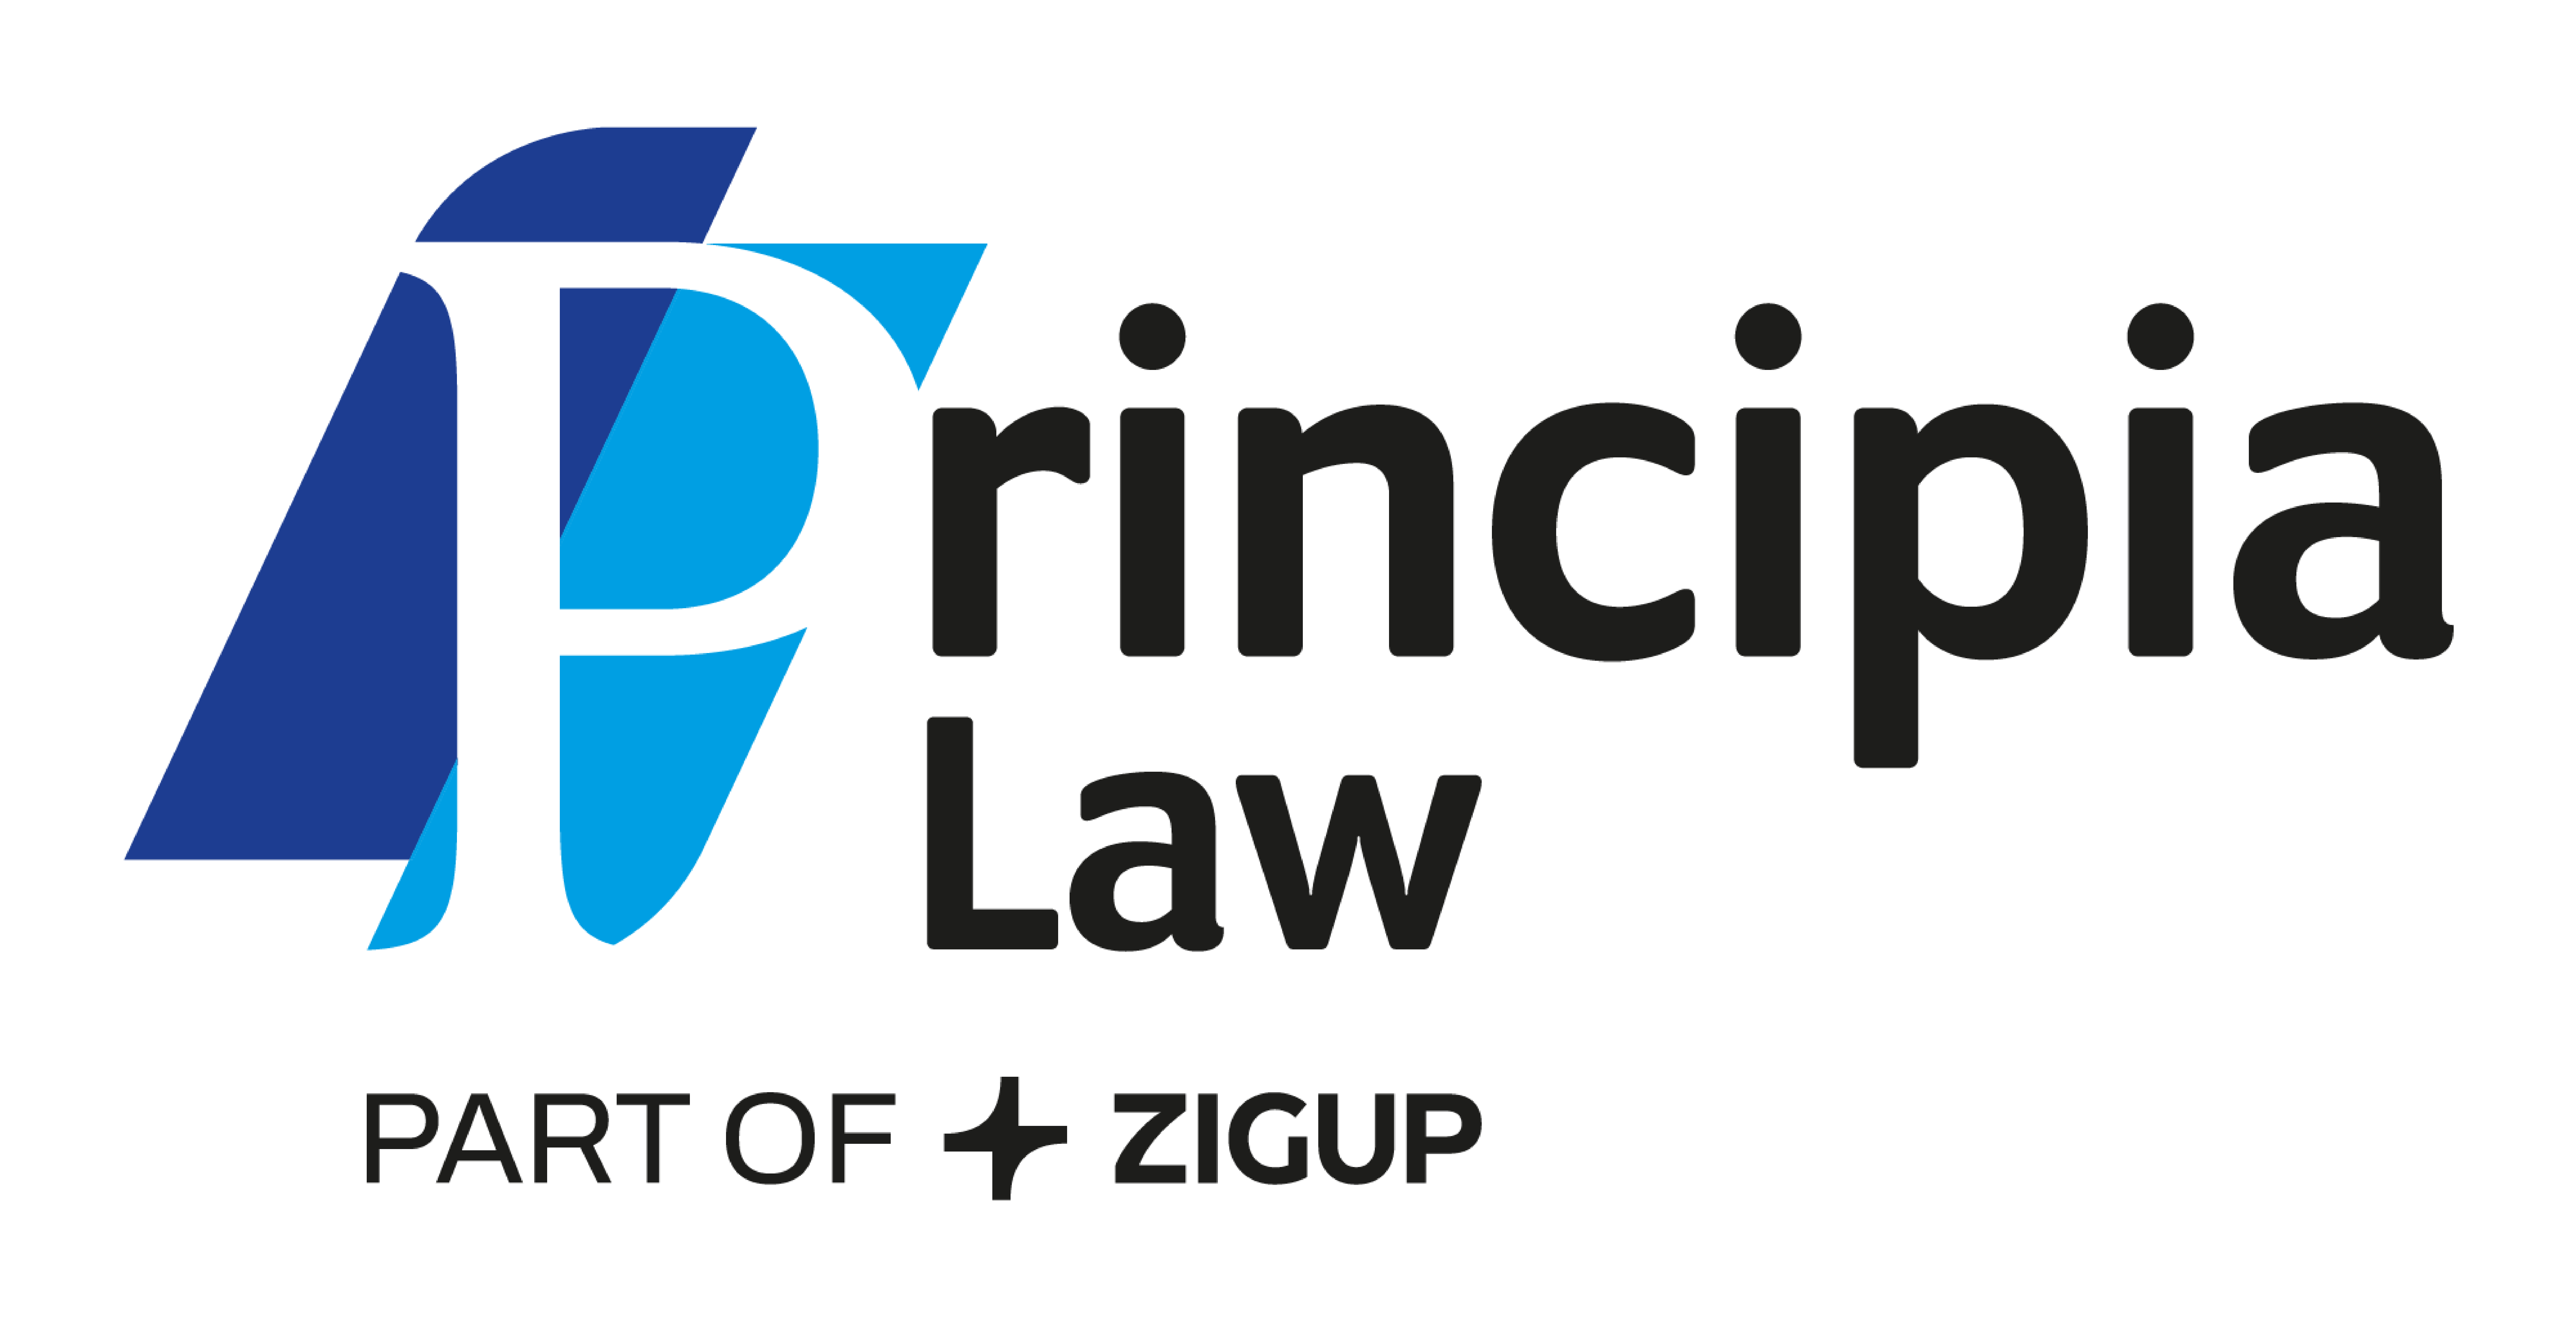 ZIGUP logo